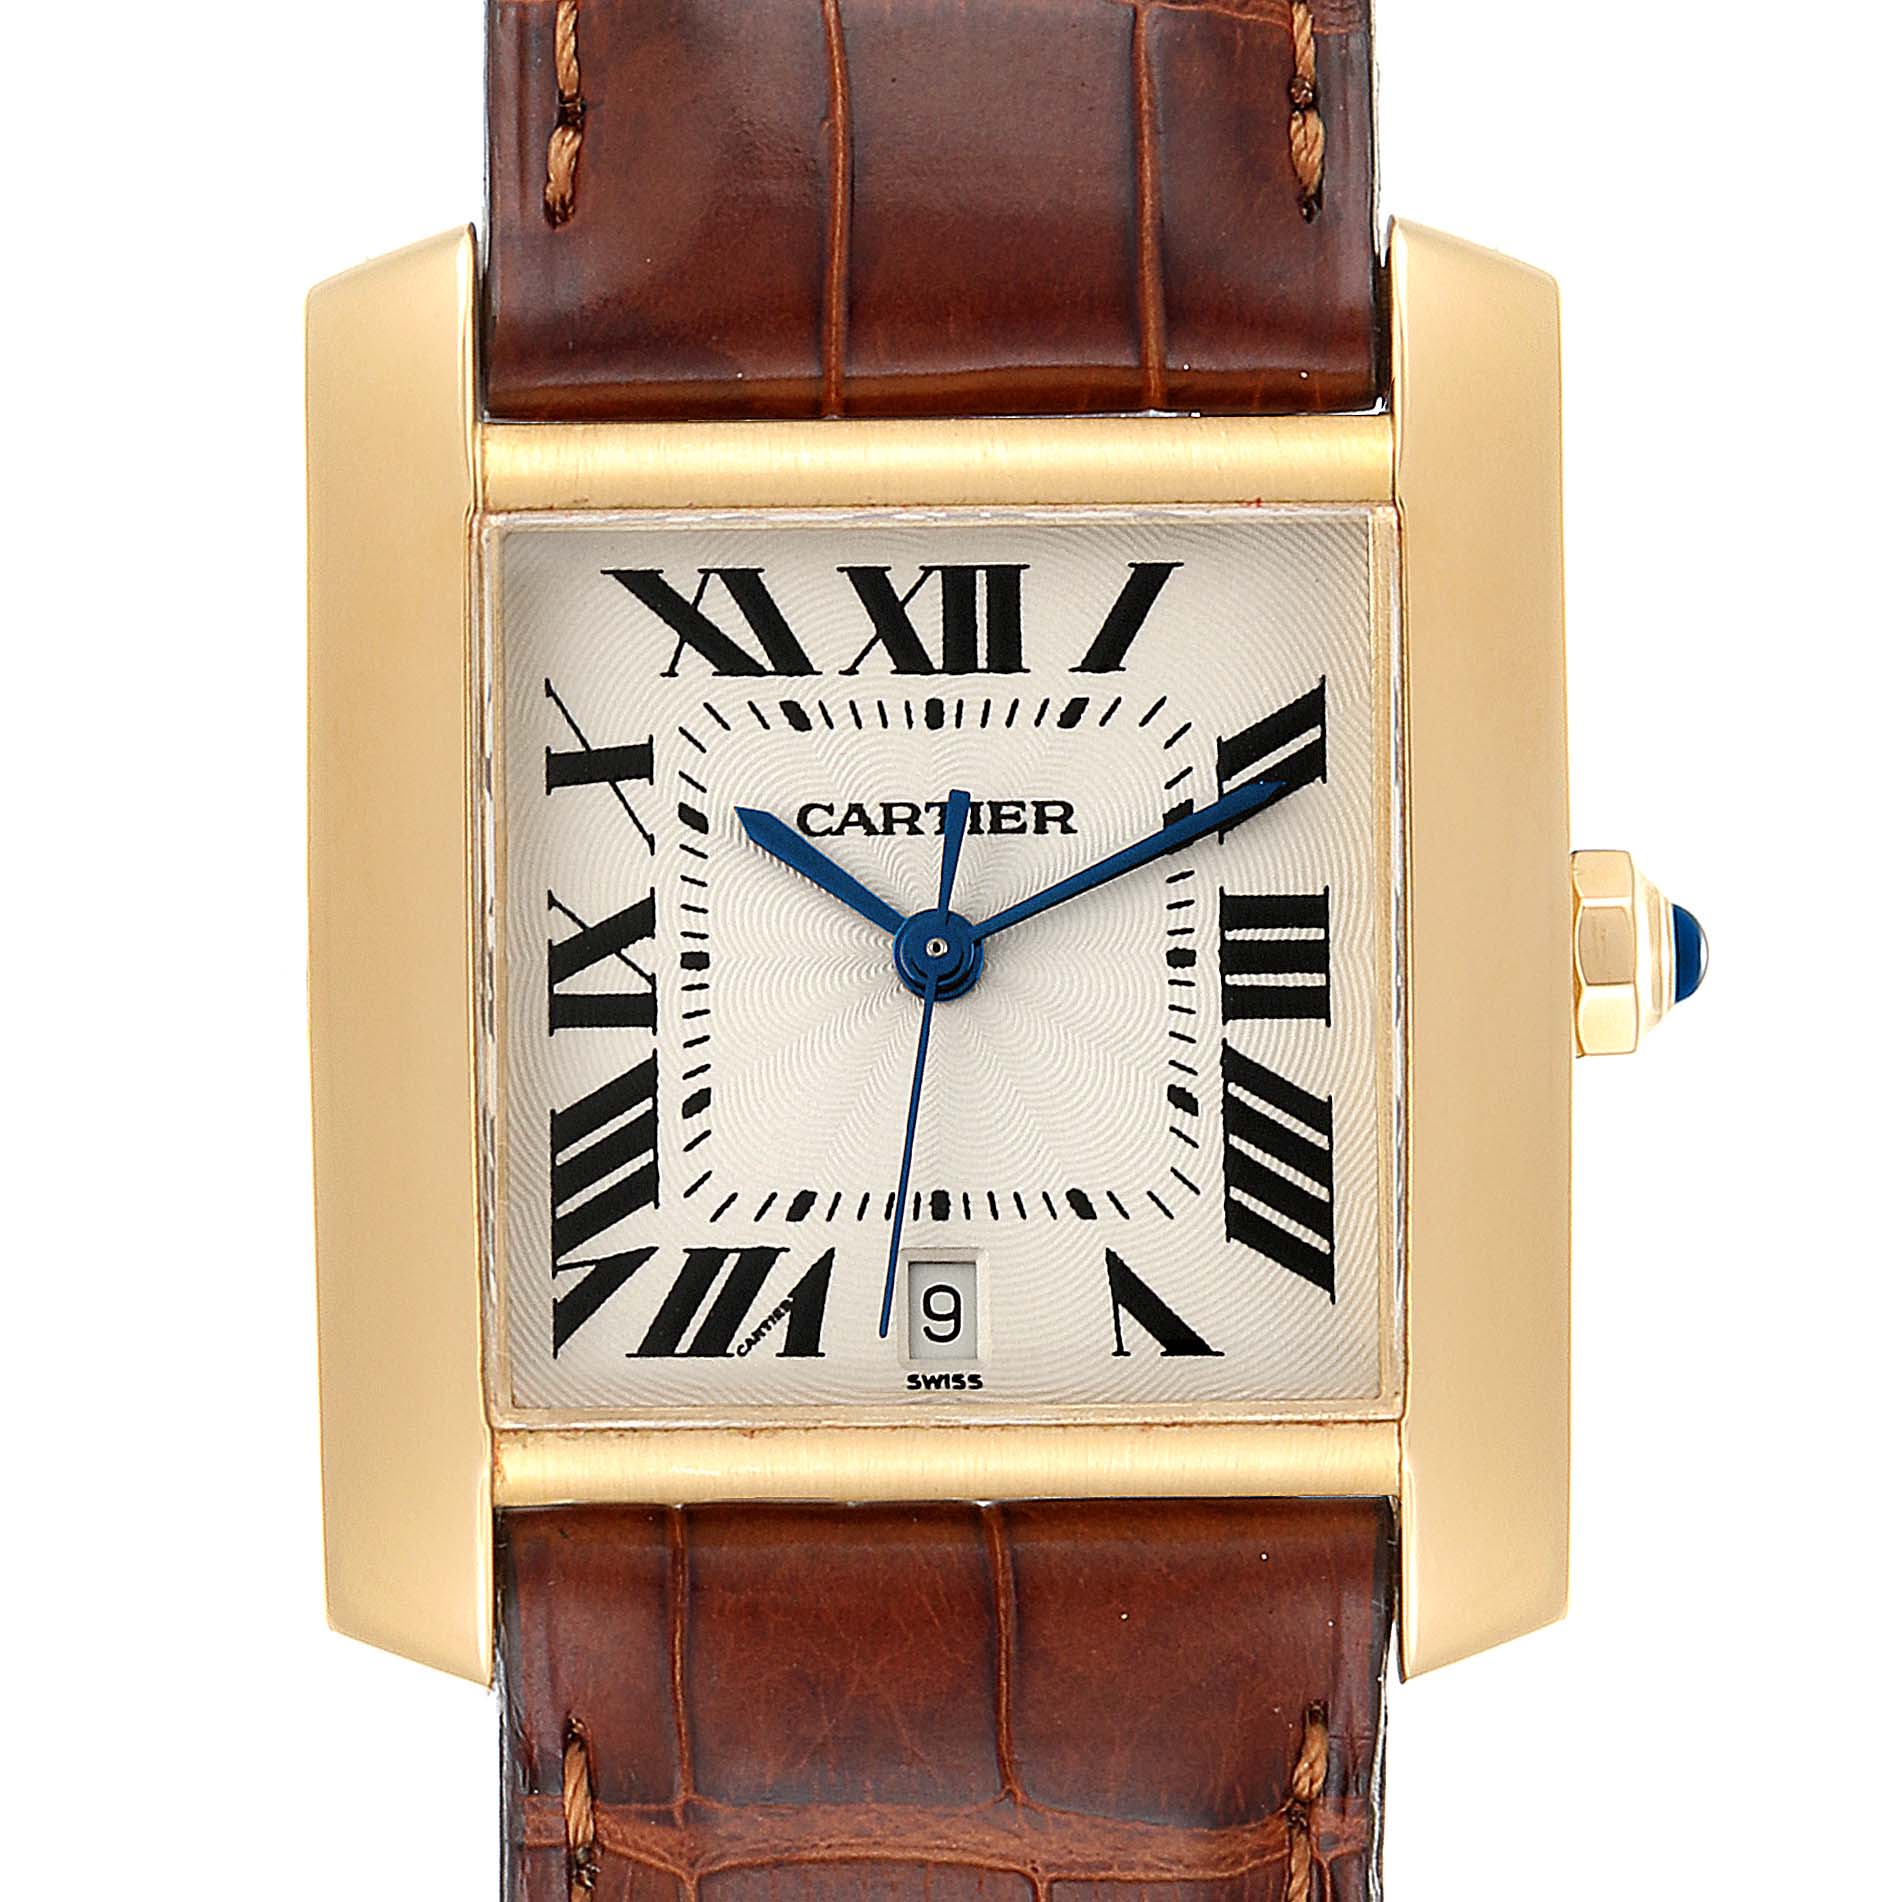 Discount Cartier Watches - Janot Atlante